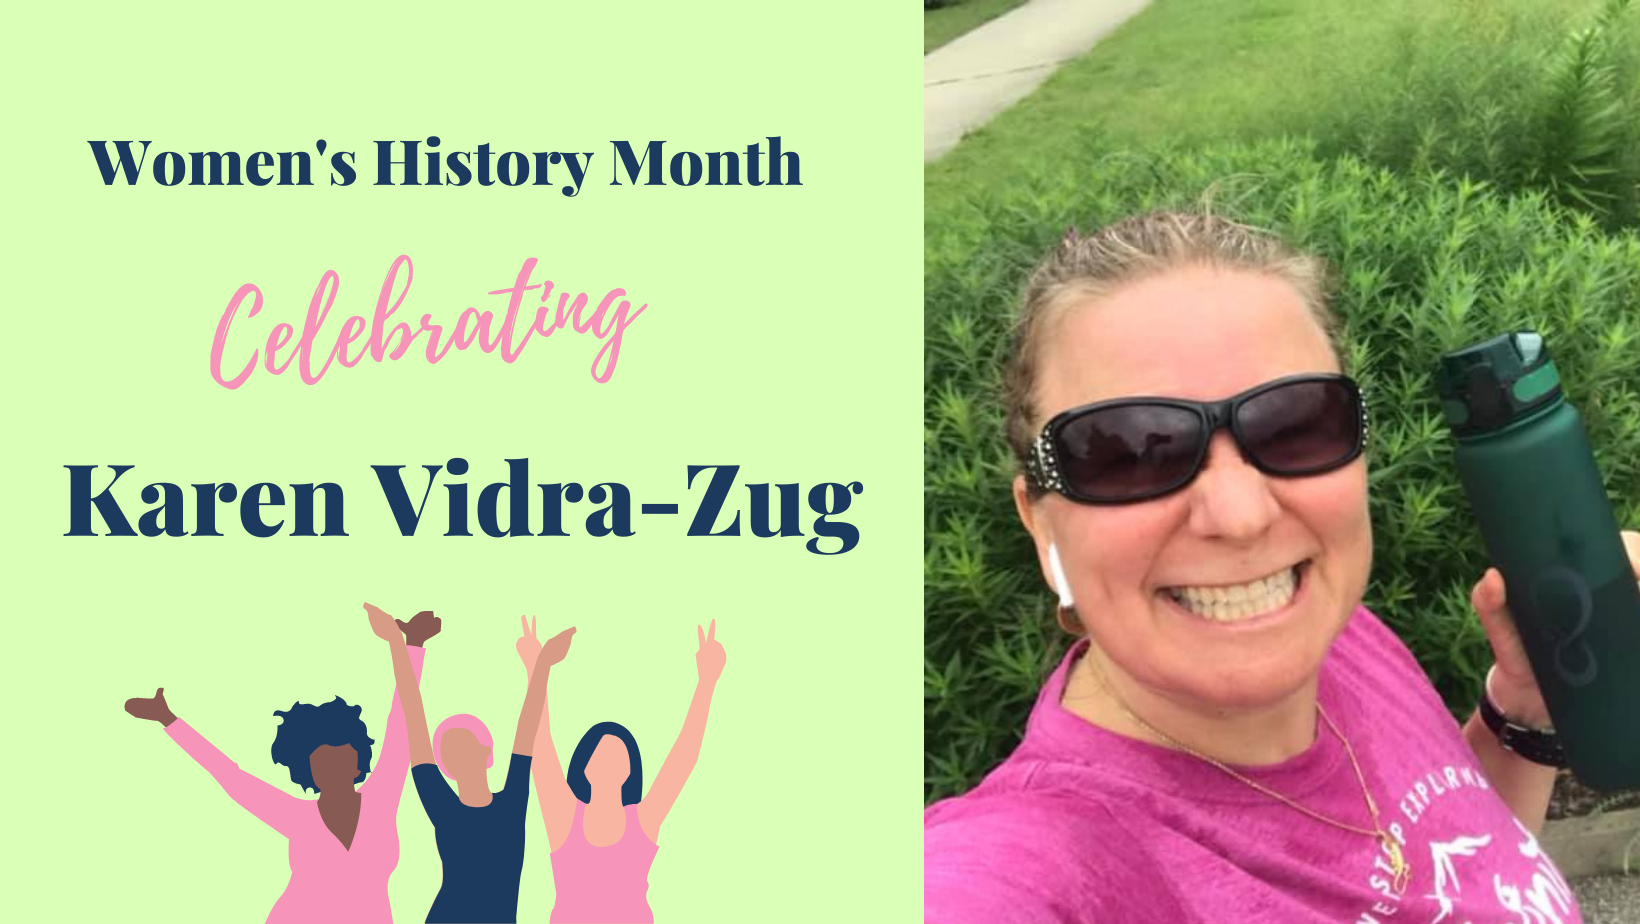 Women's History Month - Celebrating Karen Vidra-Zug!